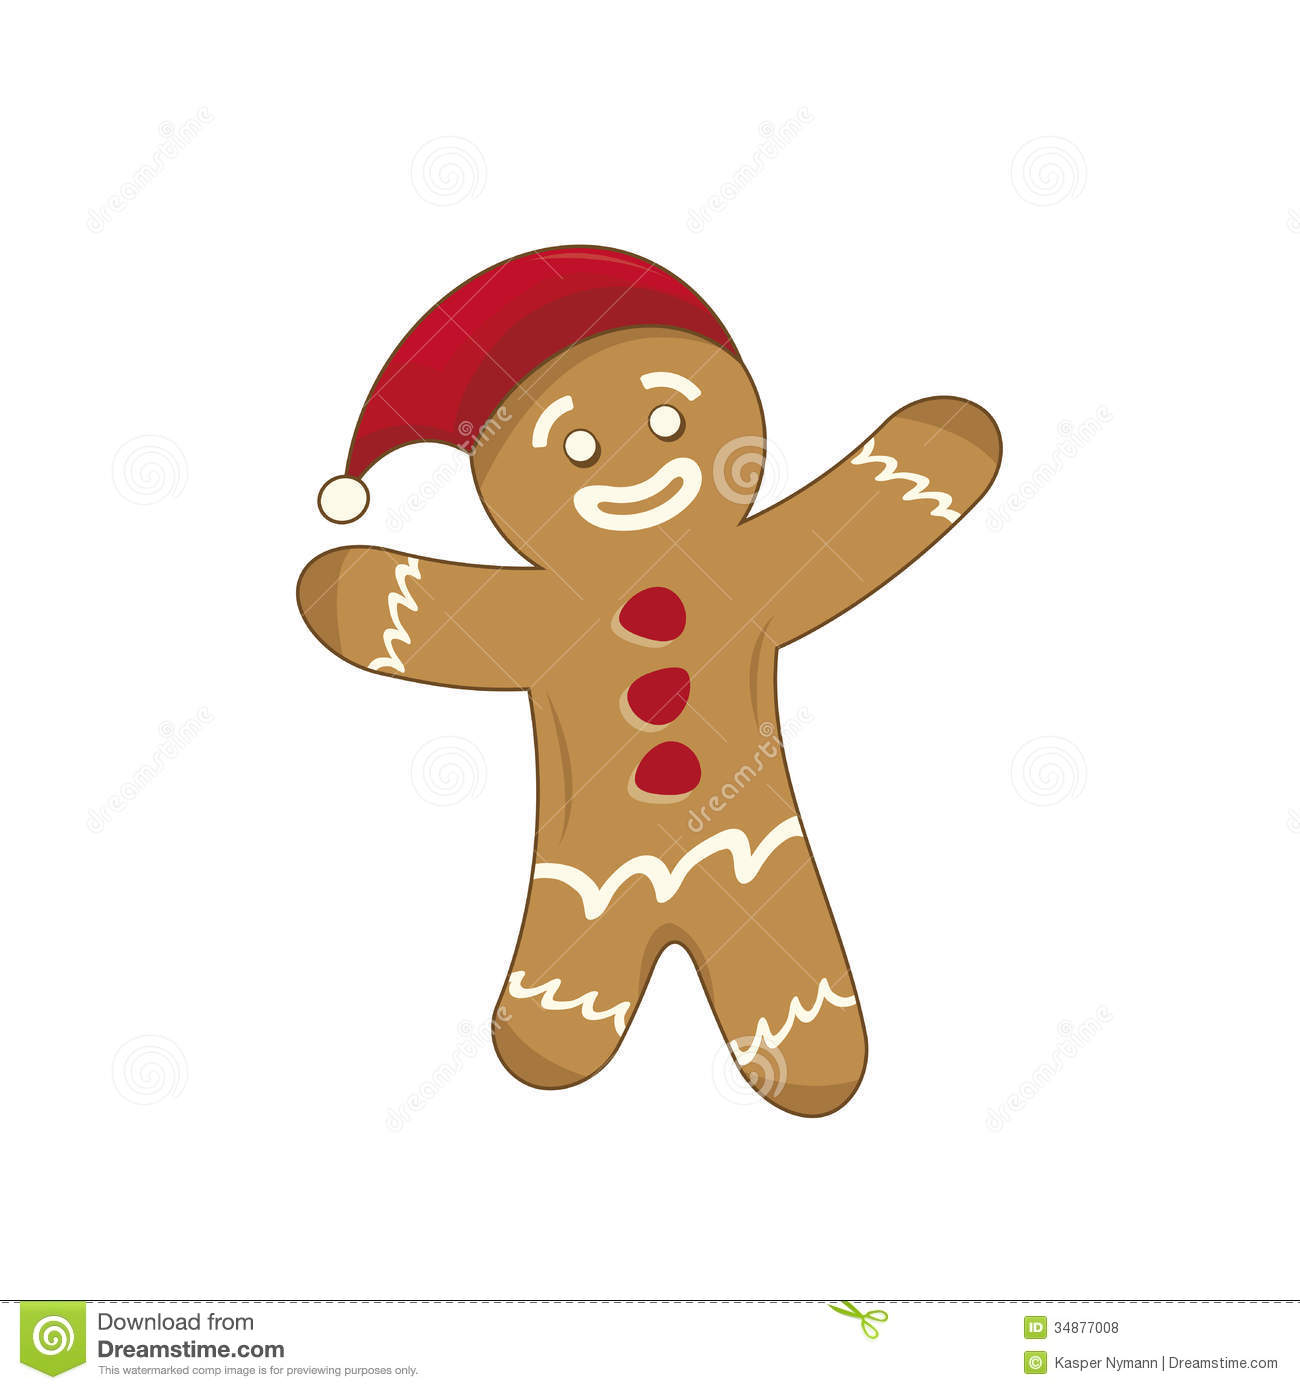 Happy Xmas Gingerbread Man Royalty Free Stock Photos   Image  34877008